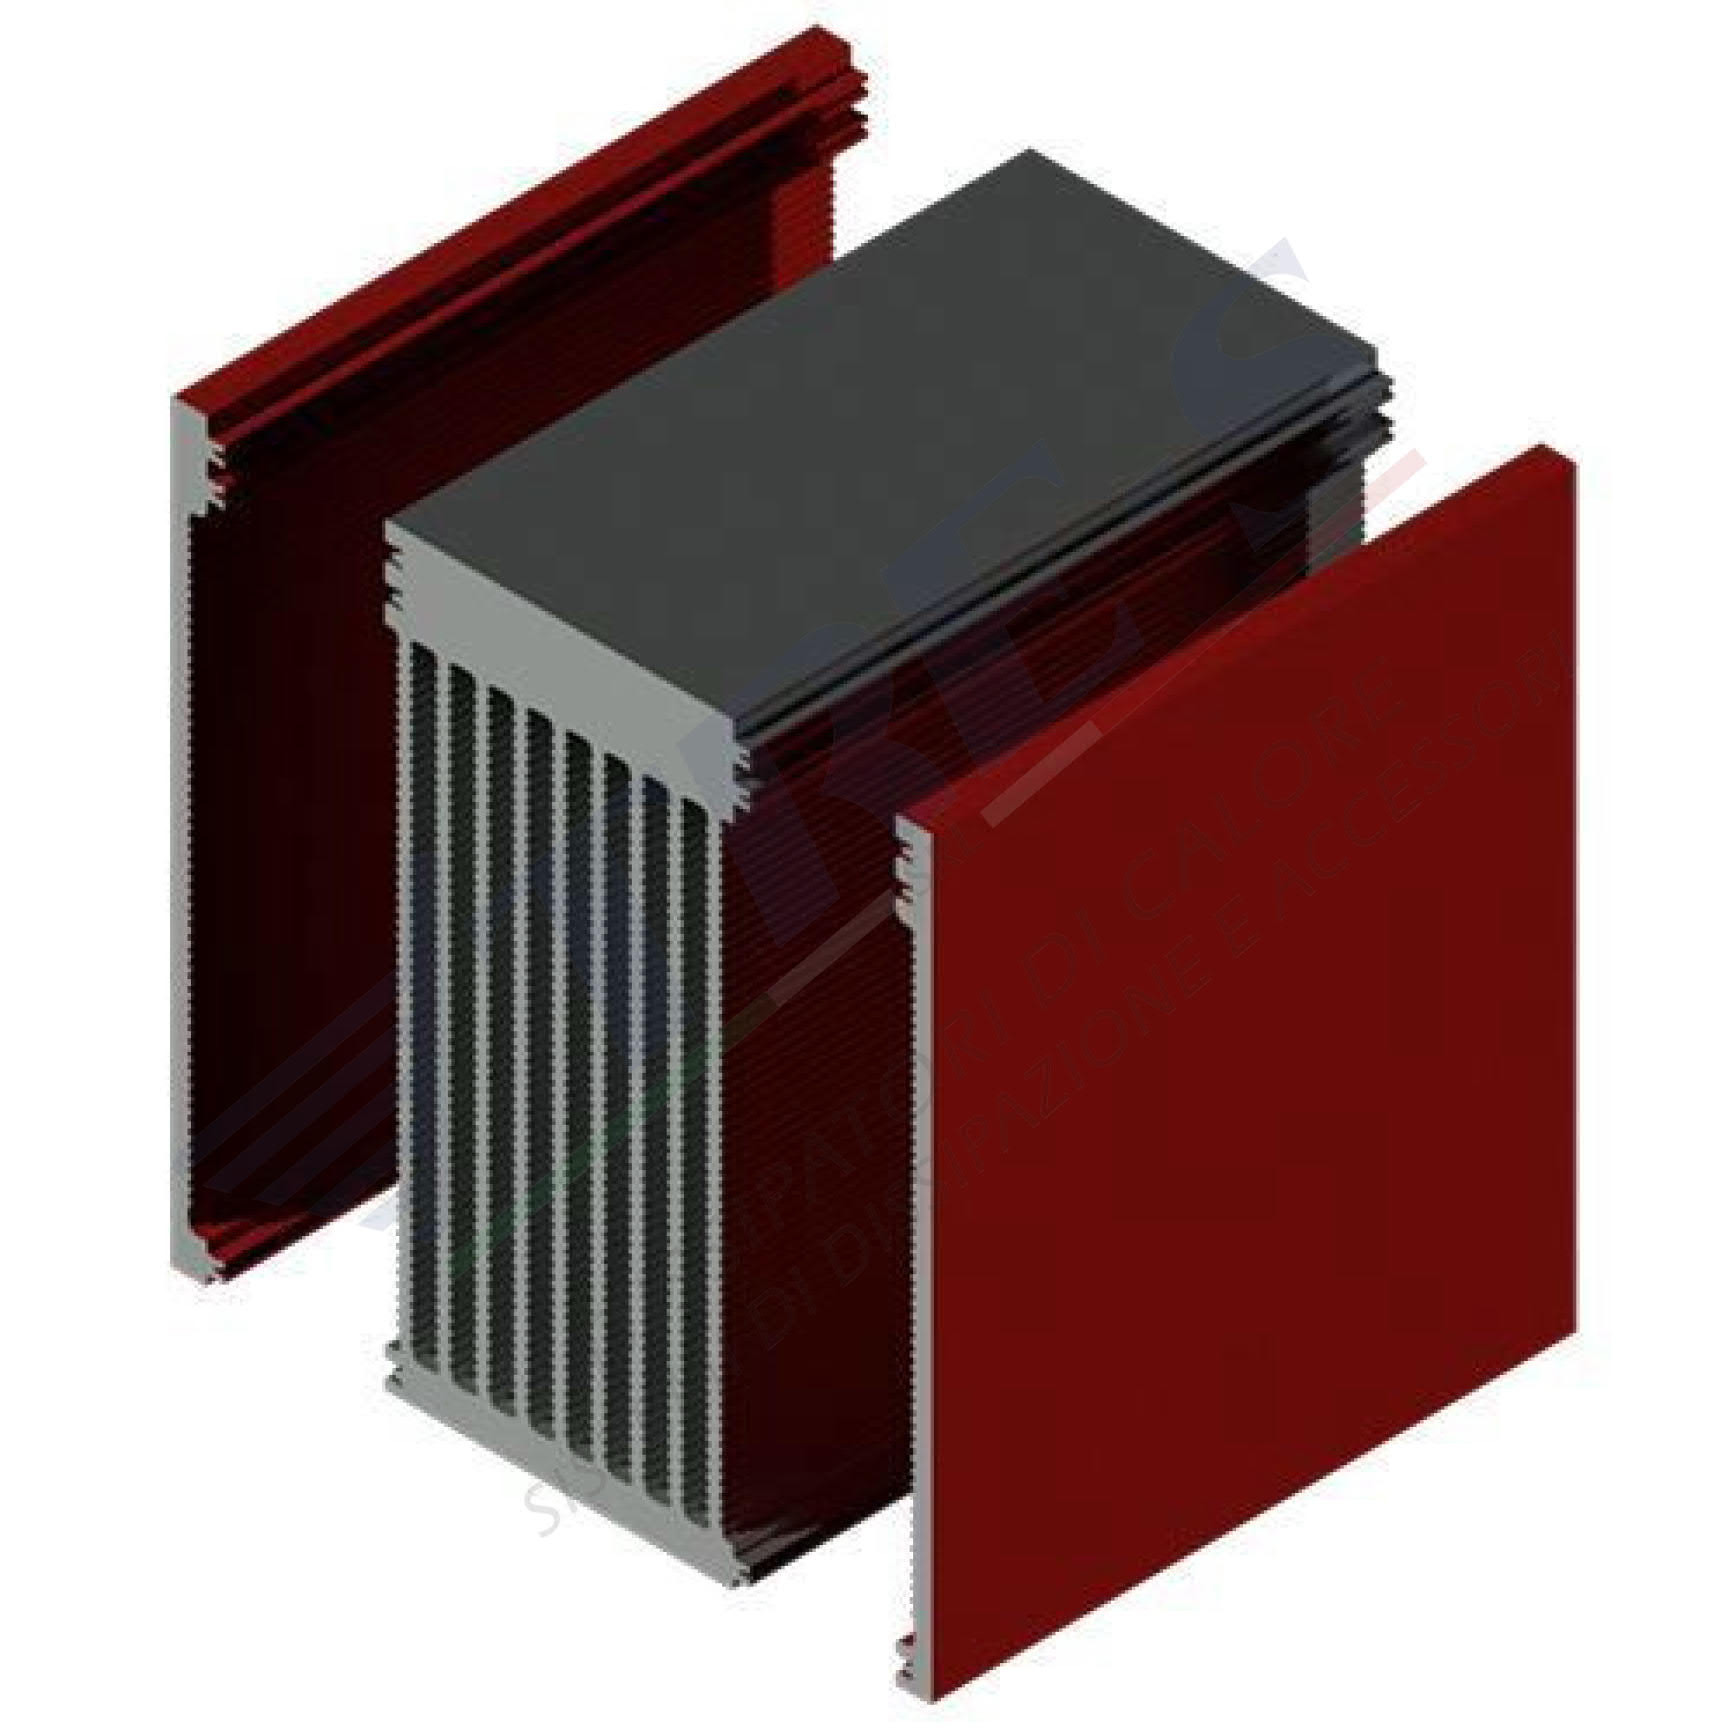 PRI1009AB - Embedded heat sinks